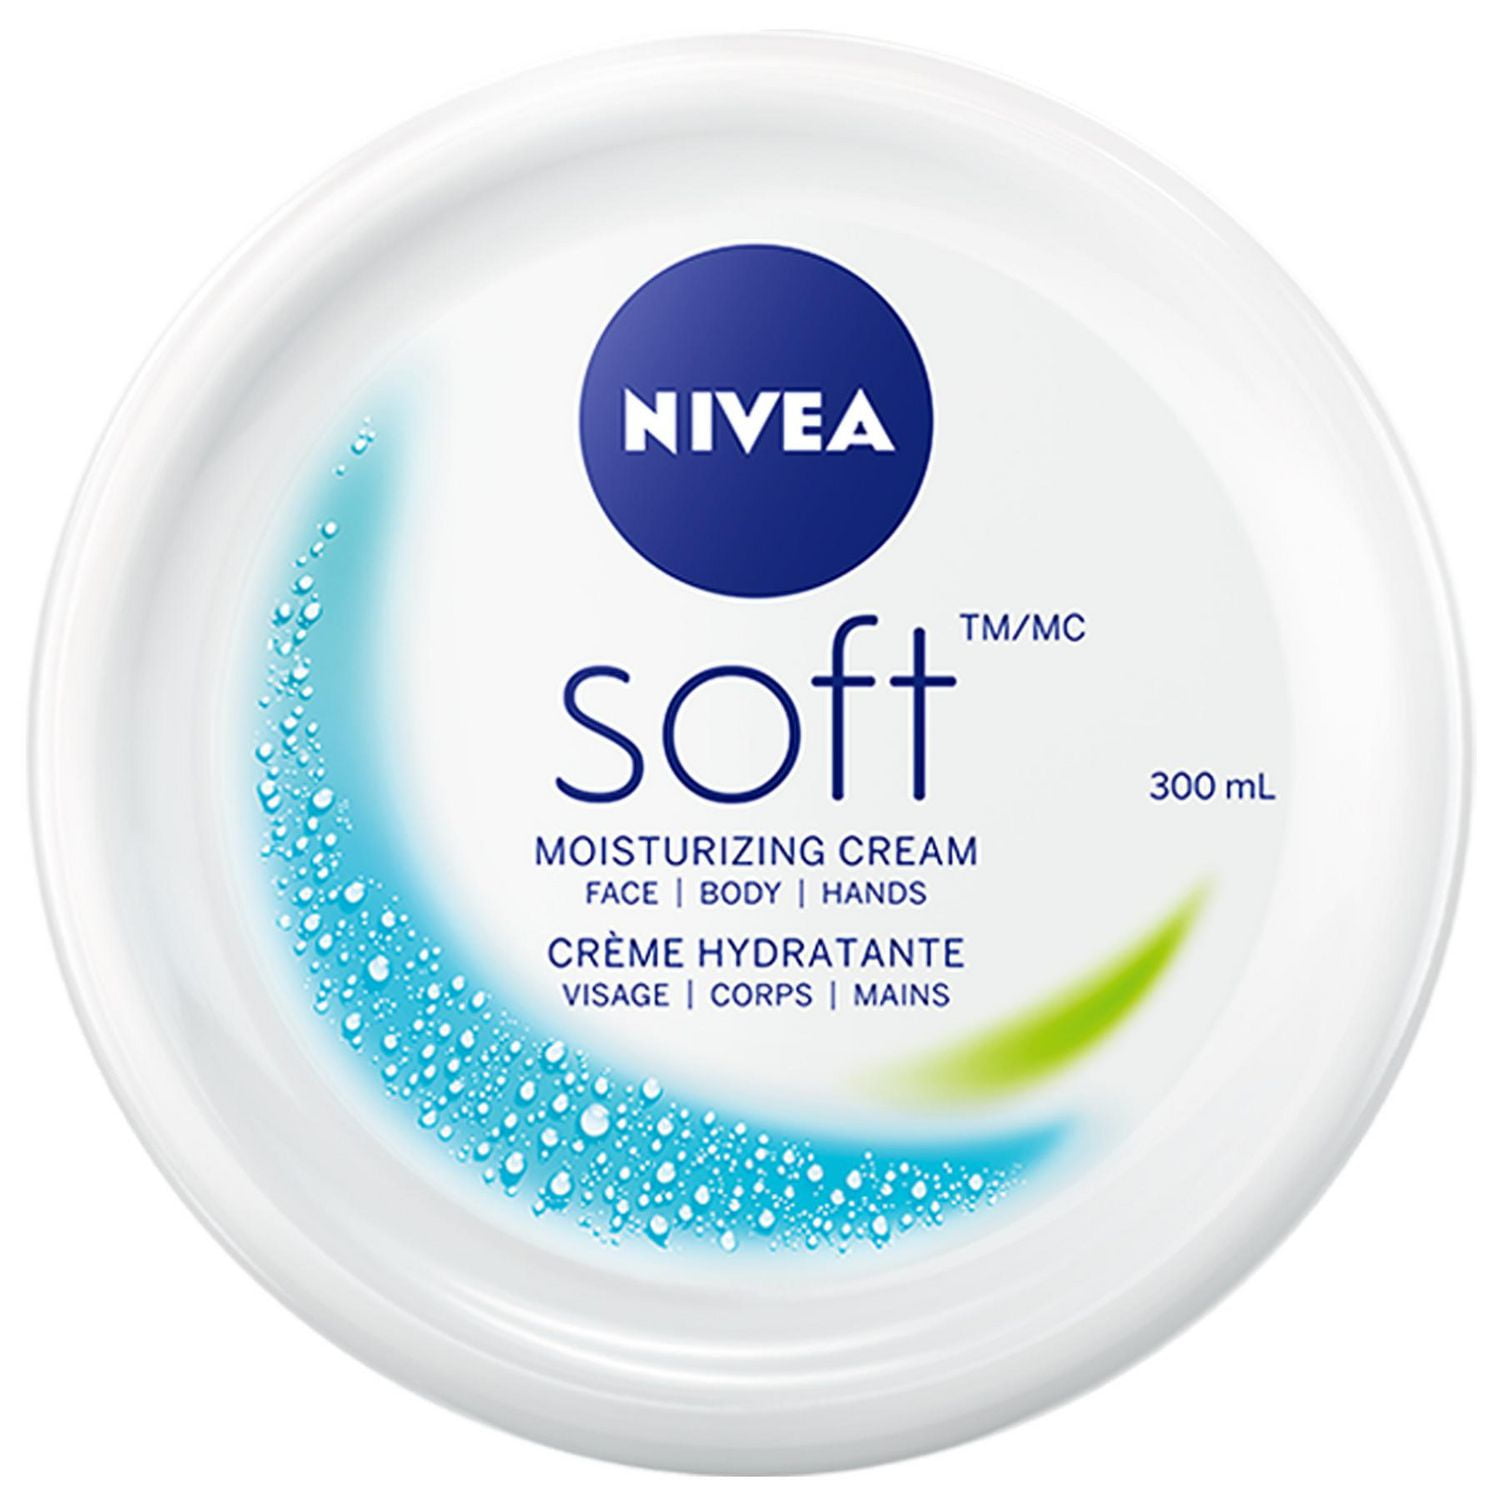 NIVEA Soft All-Purpose Moisturizing Cream, Face, Hand, Body Cream, Non-greasy, hydrating, lightweight, Daily Moisturizer